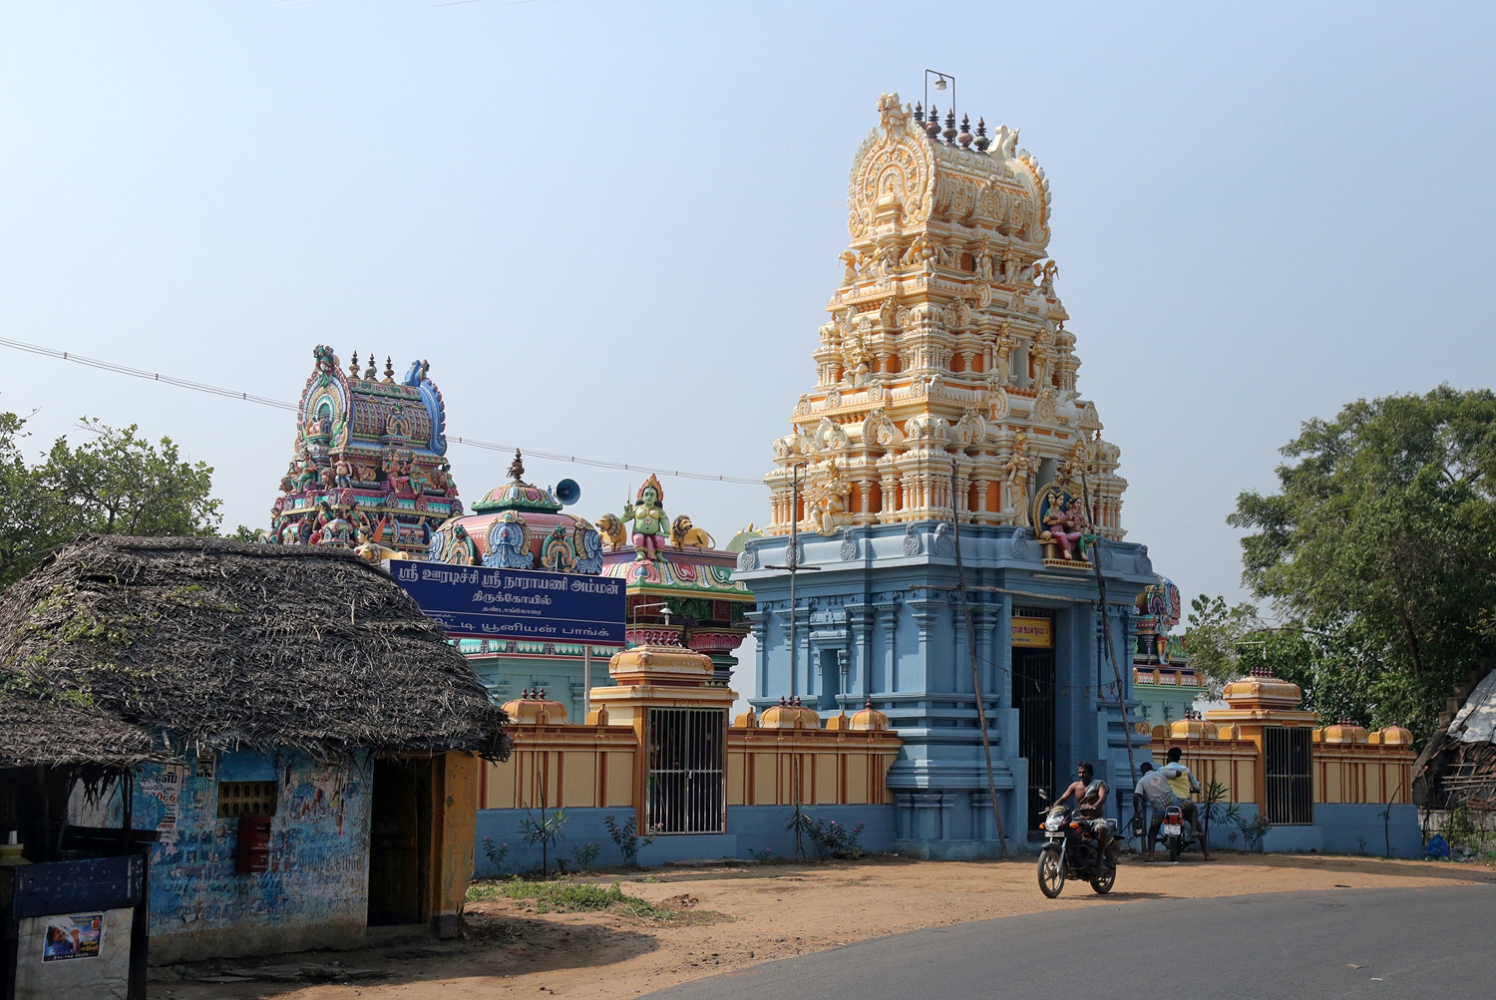 bill-hocker-tamil-temple-tamil-nadu-india-2018